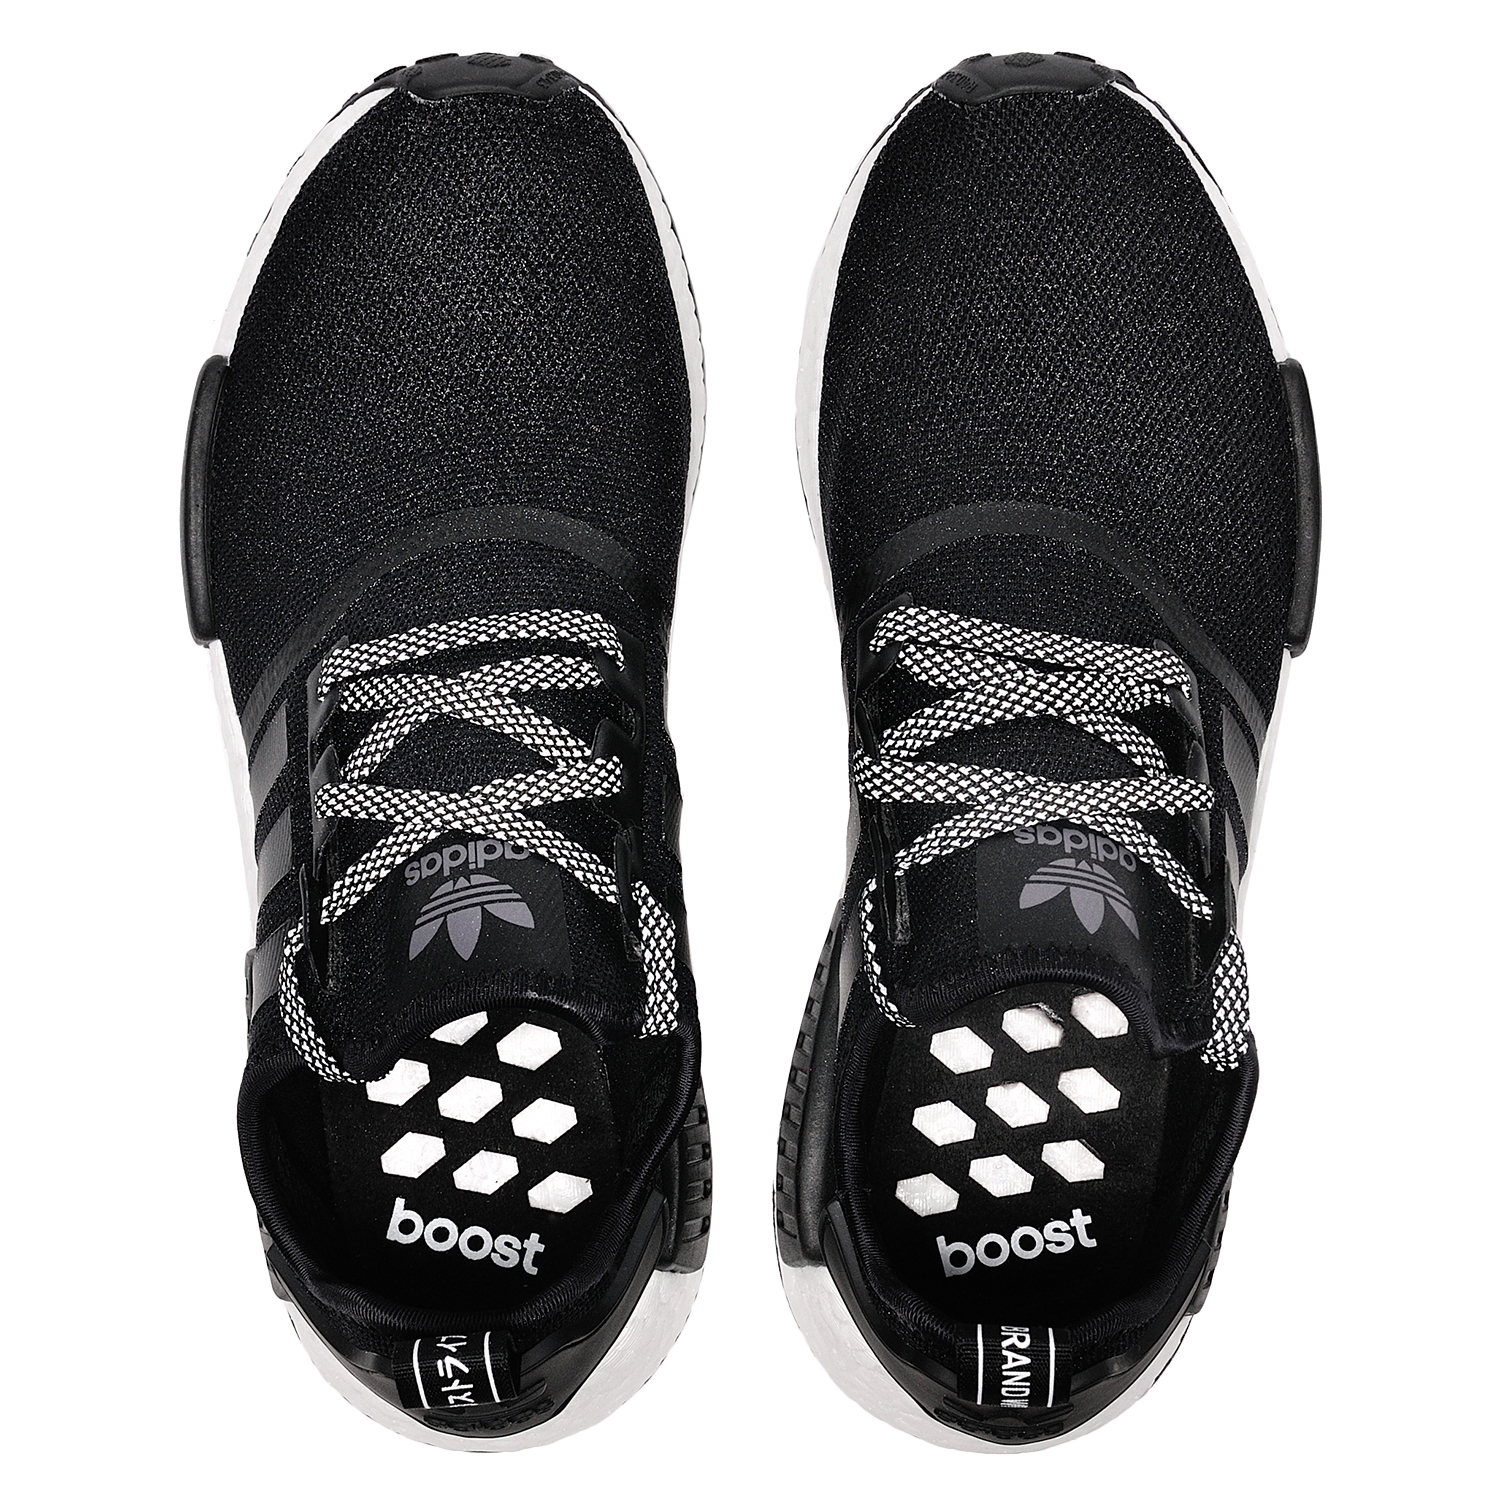 Adidas NMD R1 Black/White